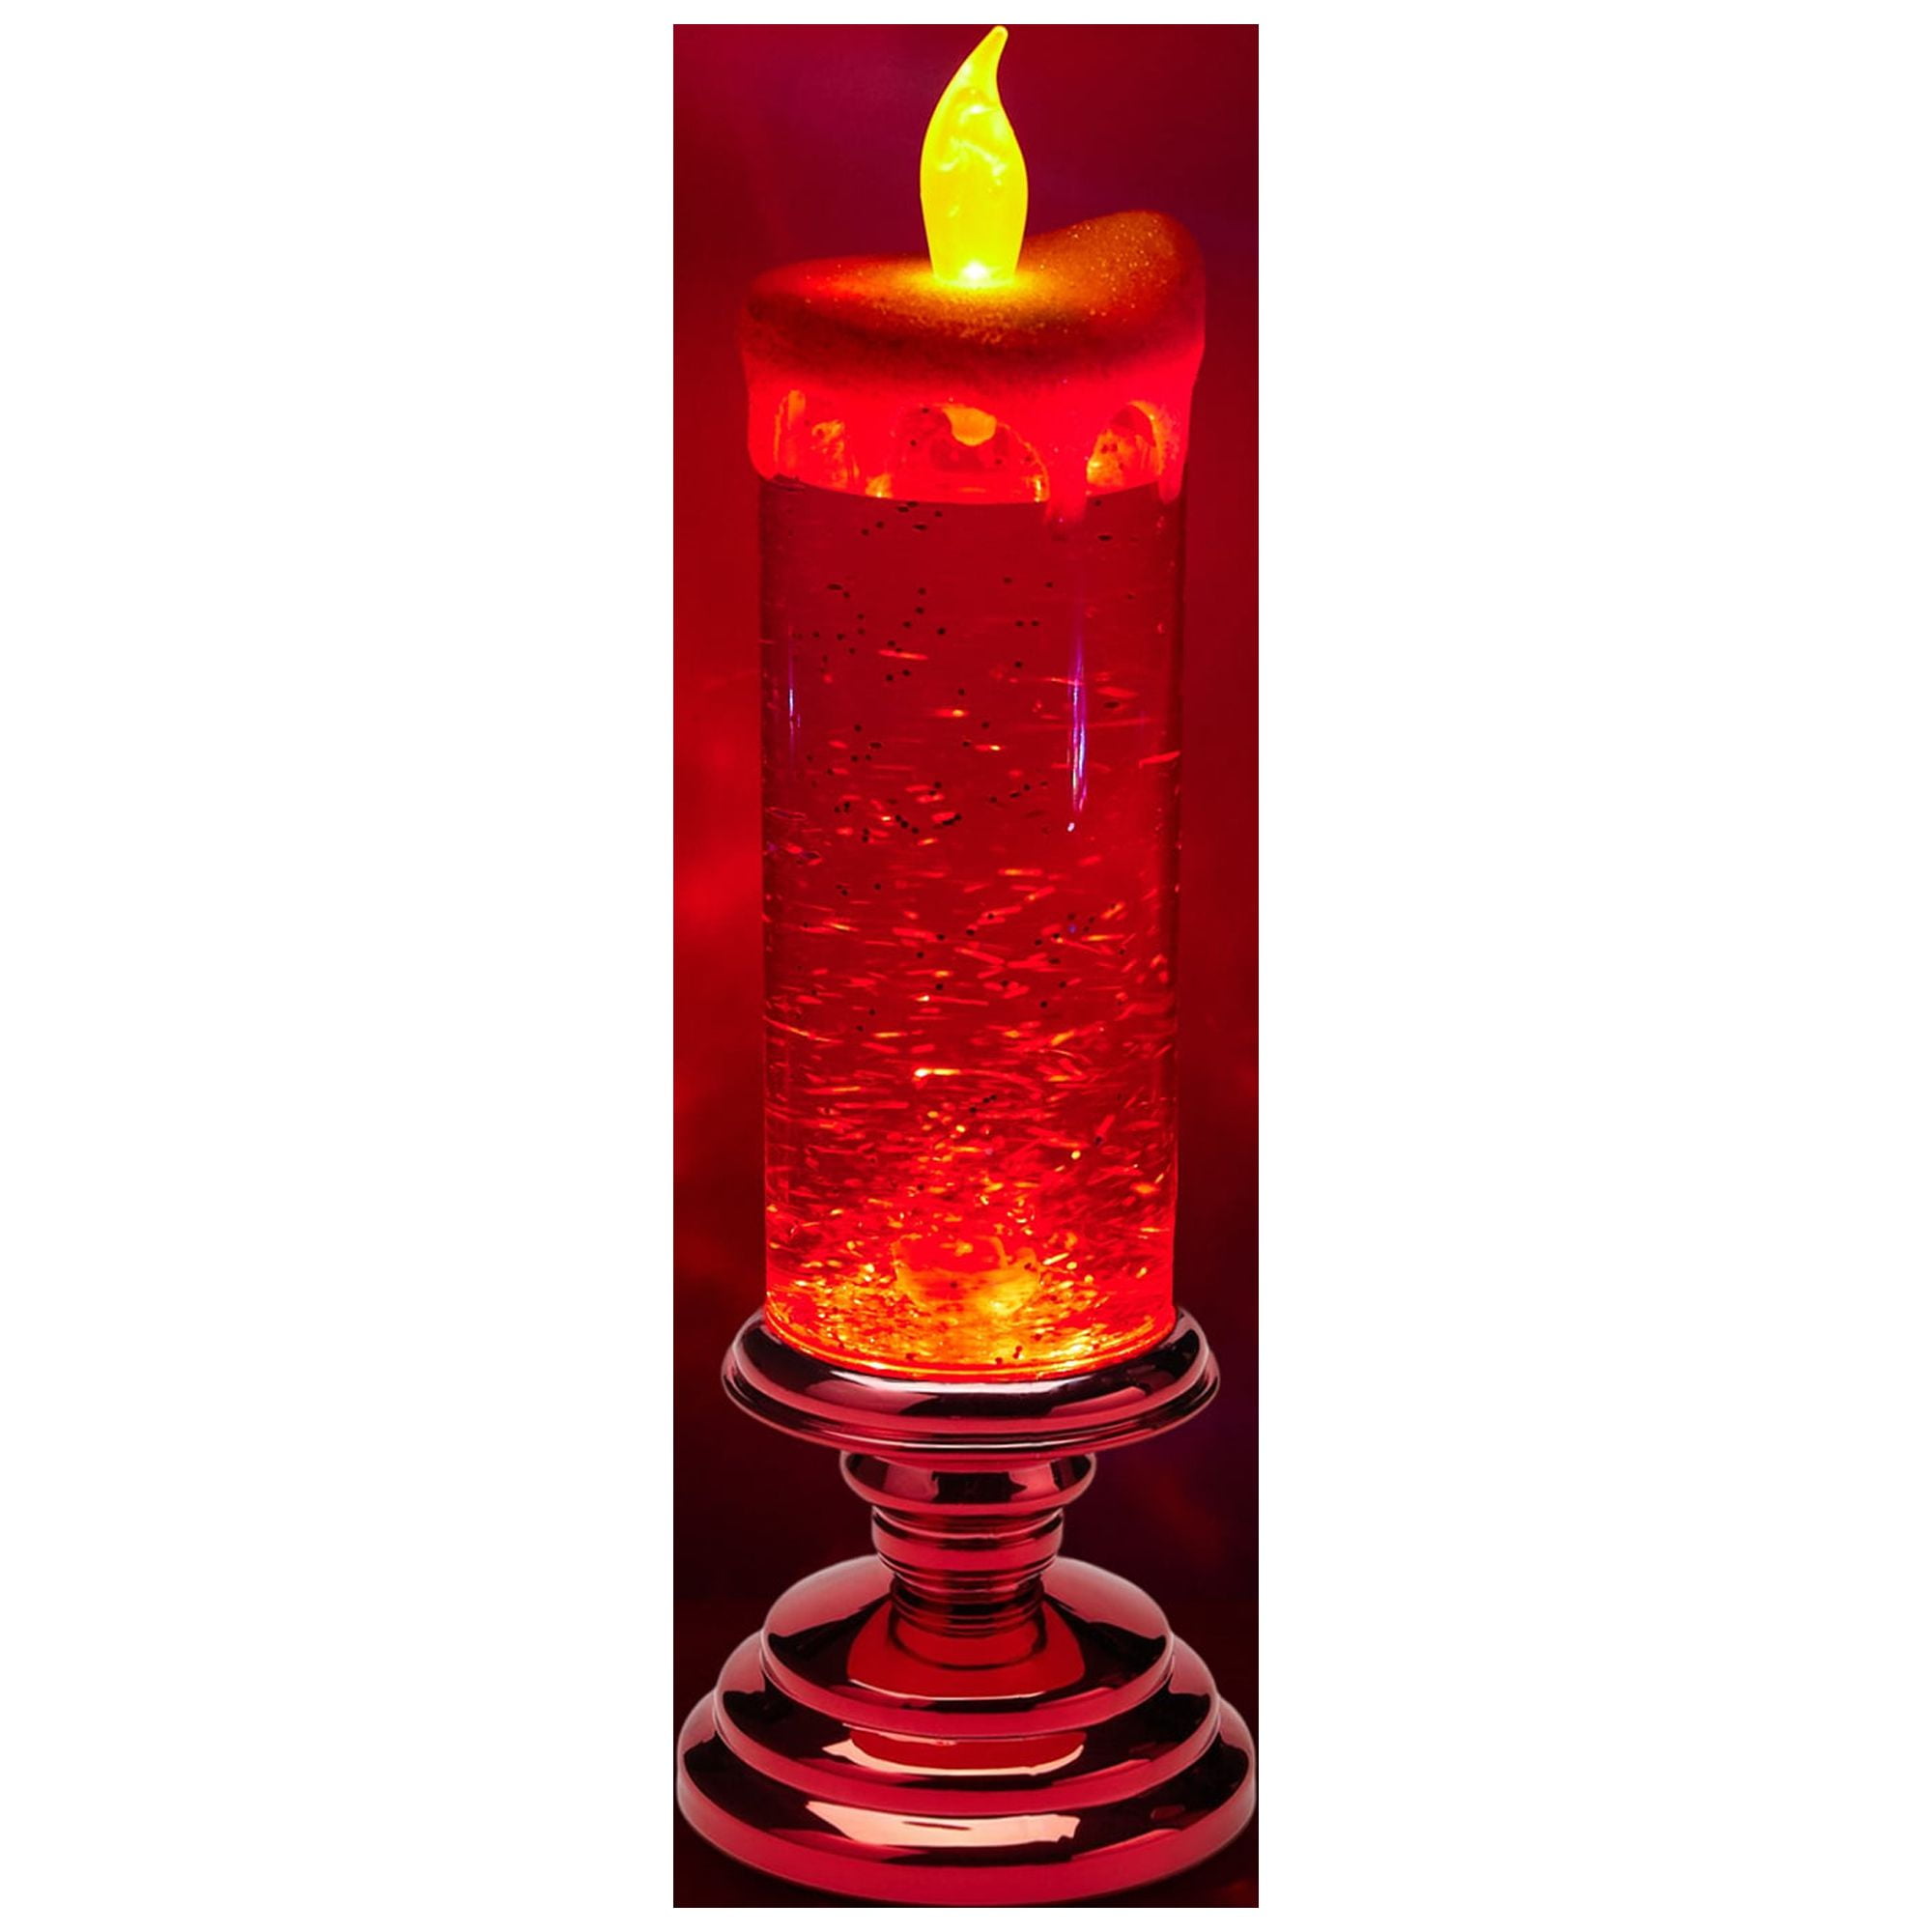 Mubineo Christmas LED Candle Light, Flameless Desktop Lamp Decor